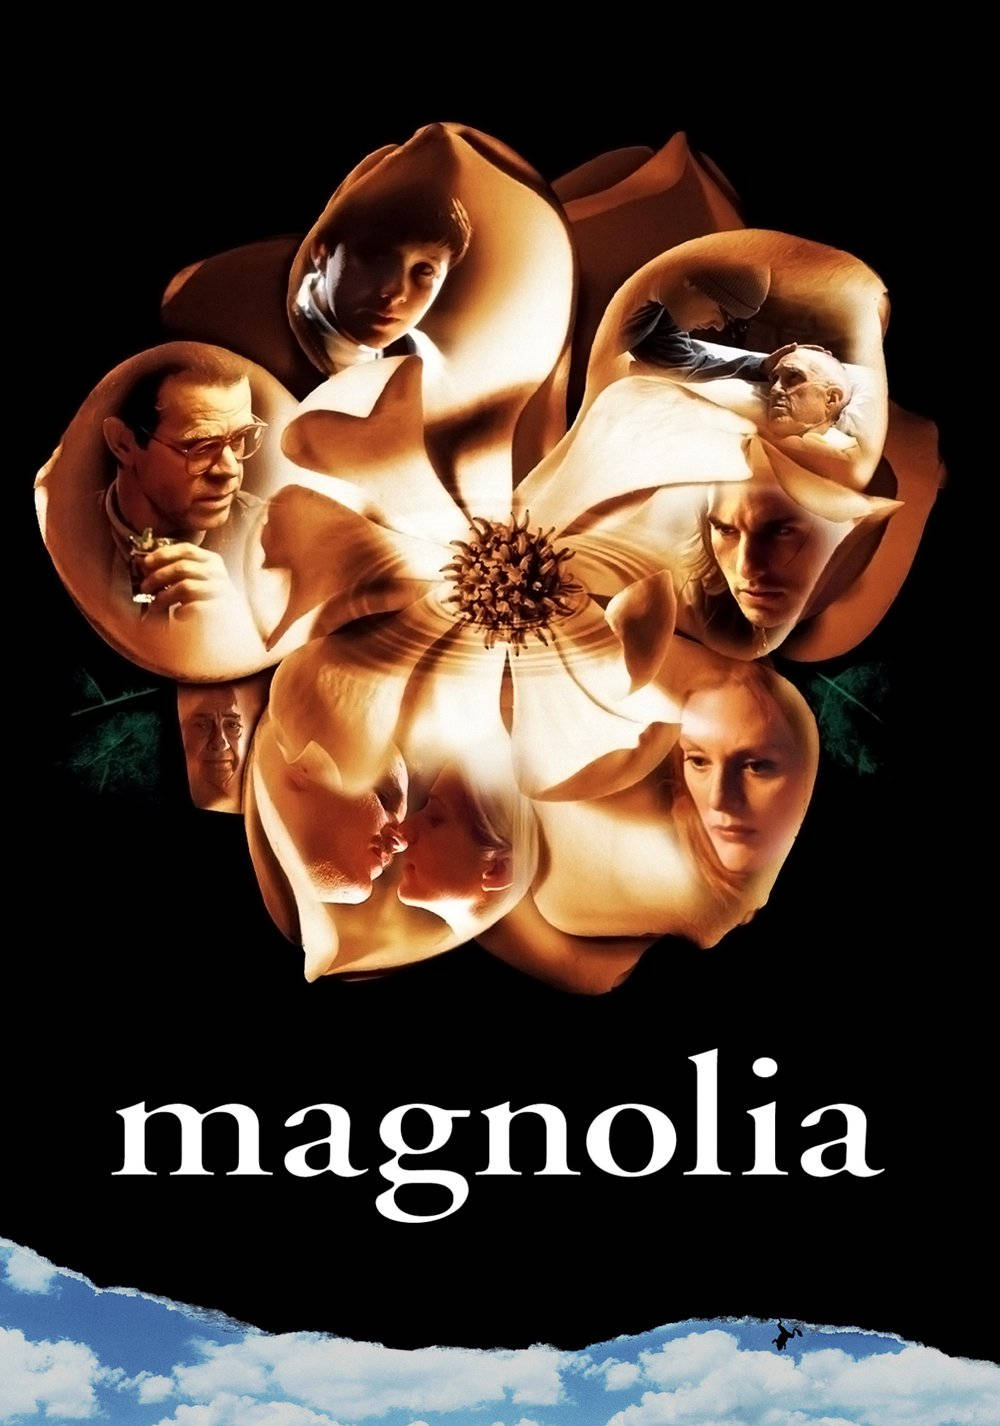 Magnoliafilmfiguren In Blütenblättern Wallpaper